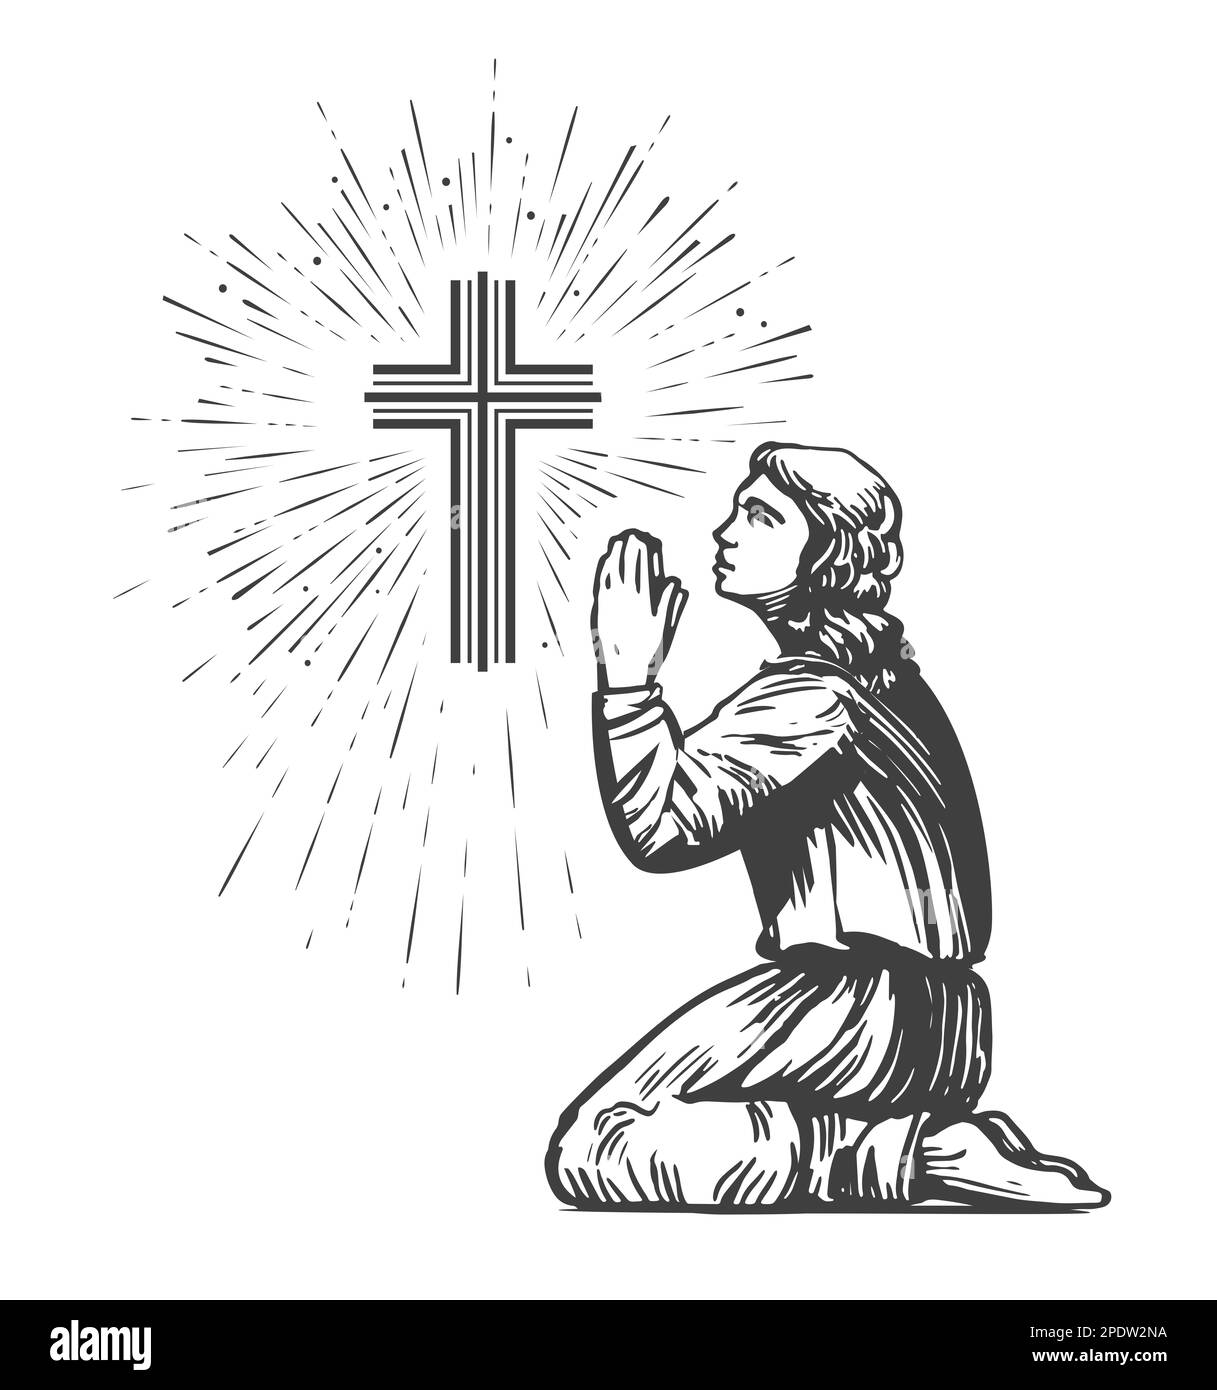 Praise of God. Shining cross, symbol of faith, worship. Man praying on his knees in vintage engraving style Stock Photo